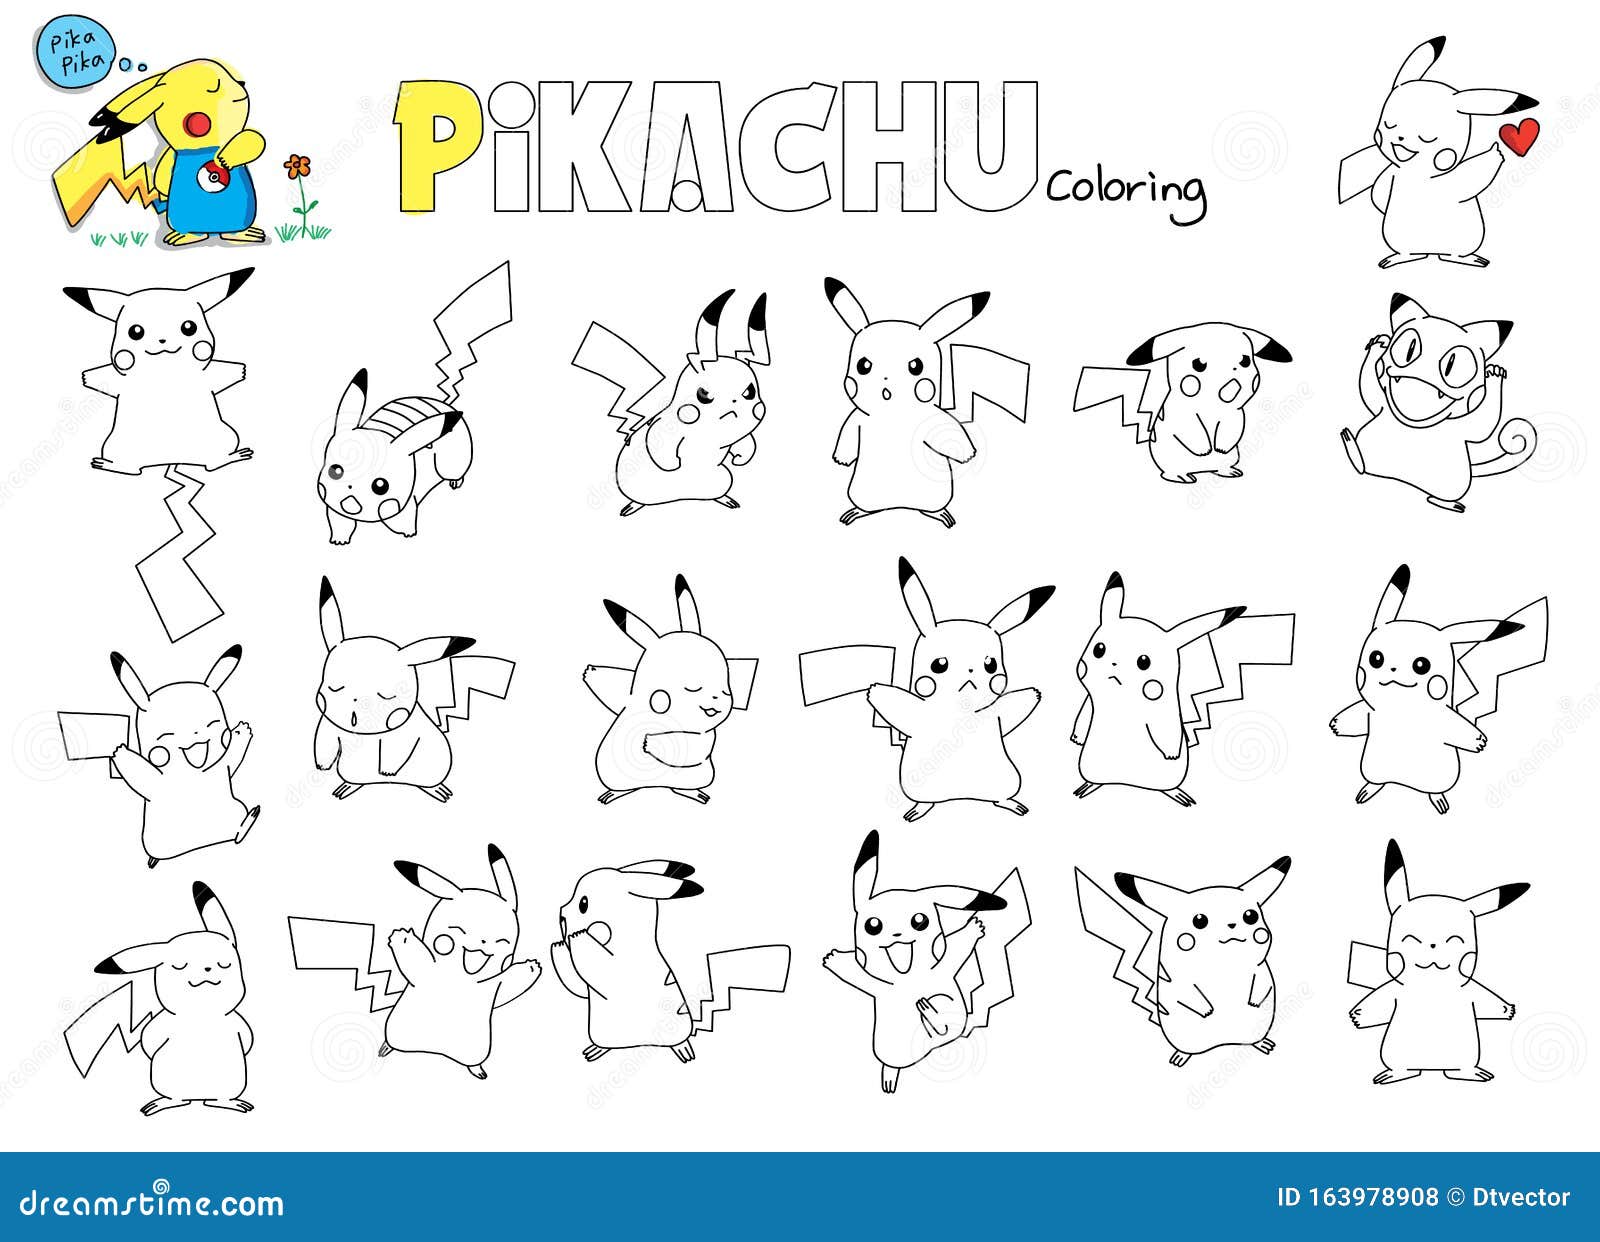 https://thumbs.dreamstime.com/z/illustration-redraw-redesign-pokemon-pikachu-coloring-set-white-color-background-redraw-redesign-pokemon-pikachu-163978908.jpg